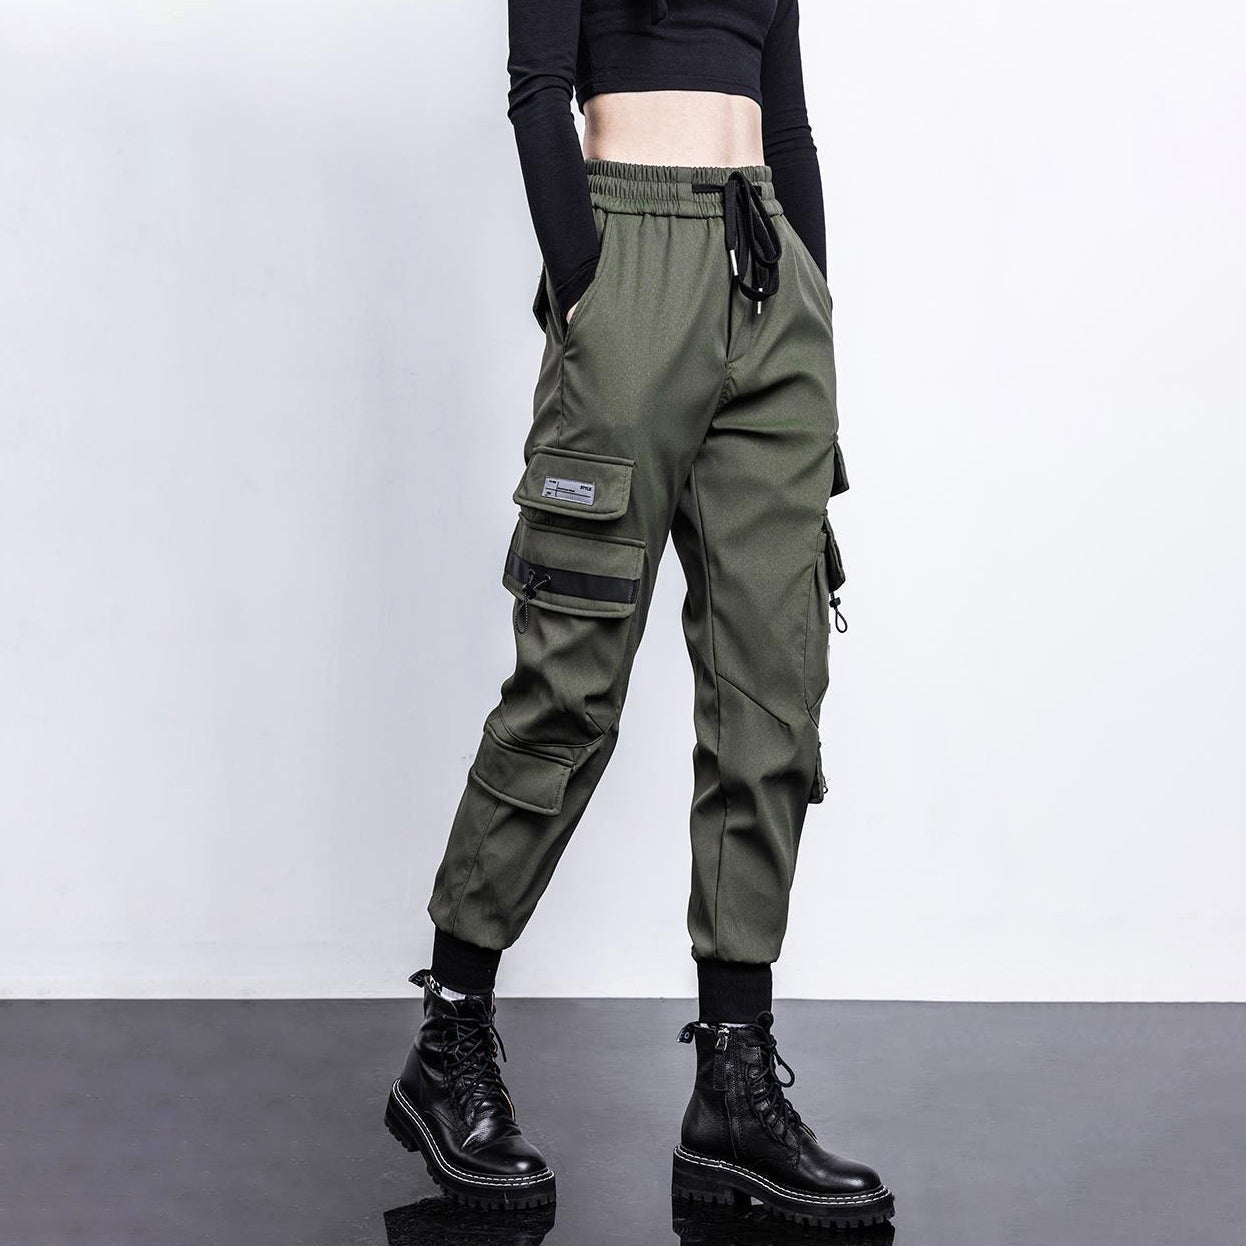 Buy WDIRARA Women's Camo Print Cargo Jeans High Waist Wide Leg Denim Army  Pants, Army Green Camo, Medium at Amazon.in